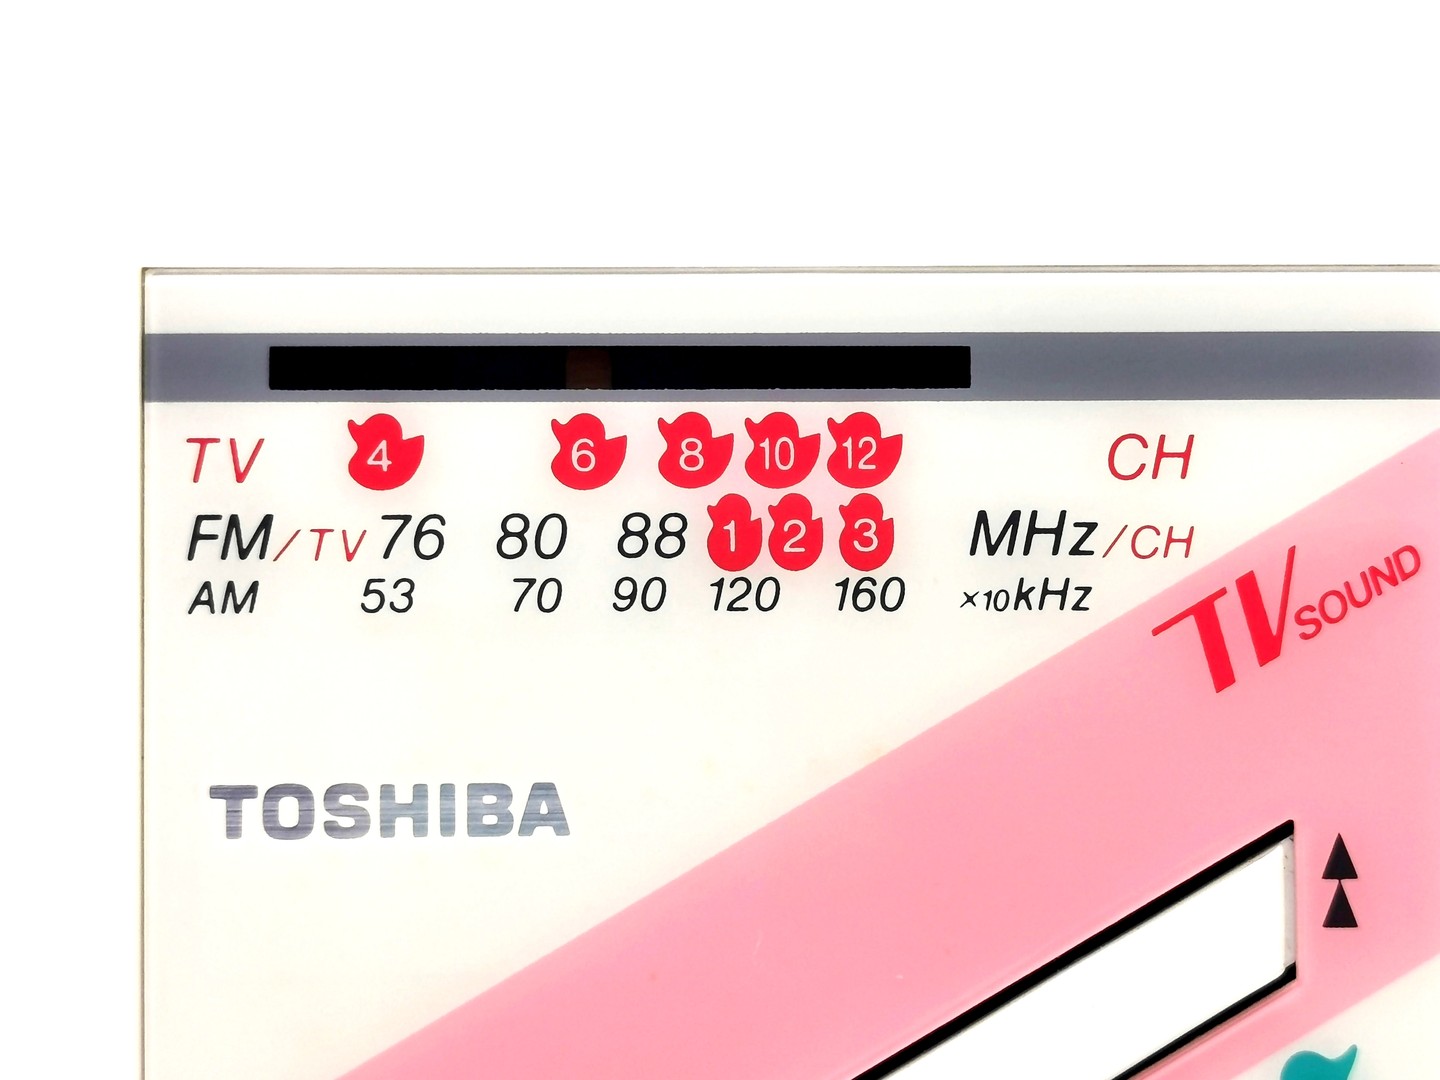 Toshiba-KT-PS10-Pink-Zoom-radio-ig-boxedwalkman